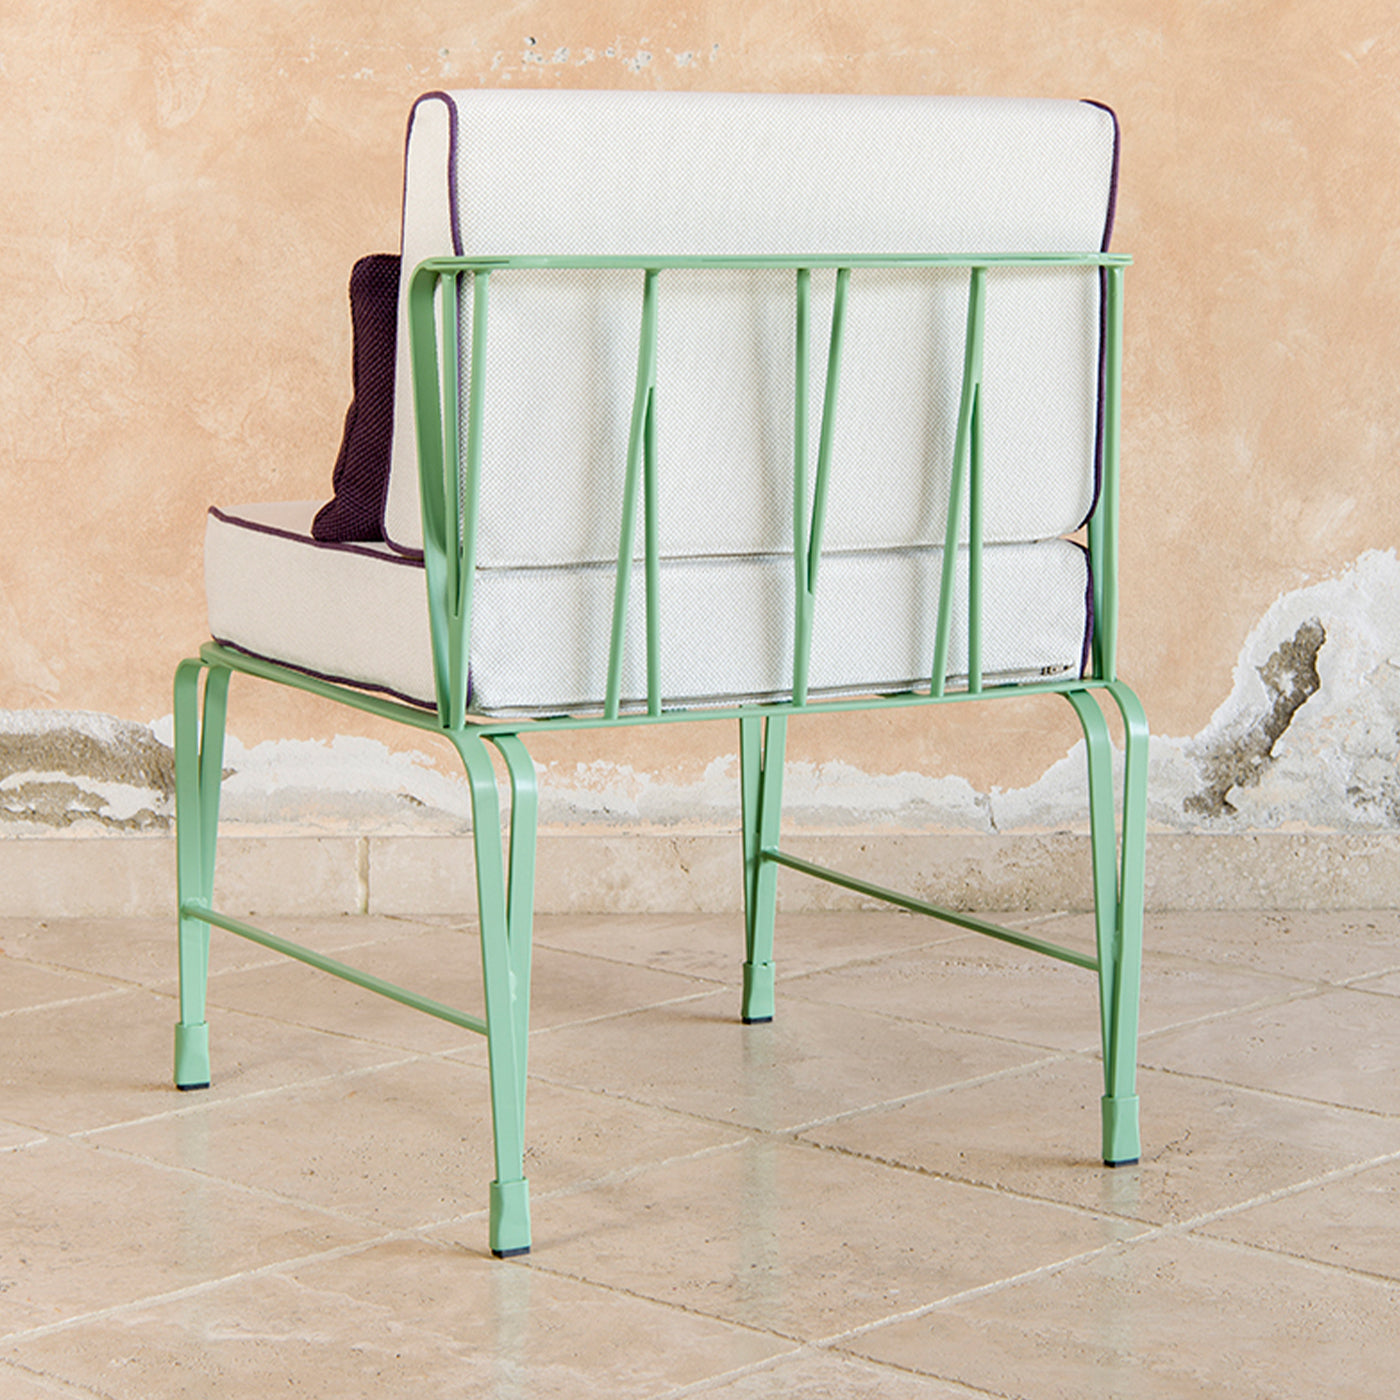 Marina Black Chair by Ciarmoli Queda Studio - Alternative view 3